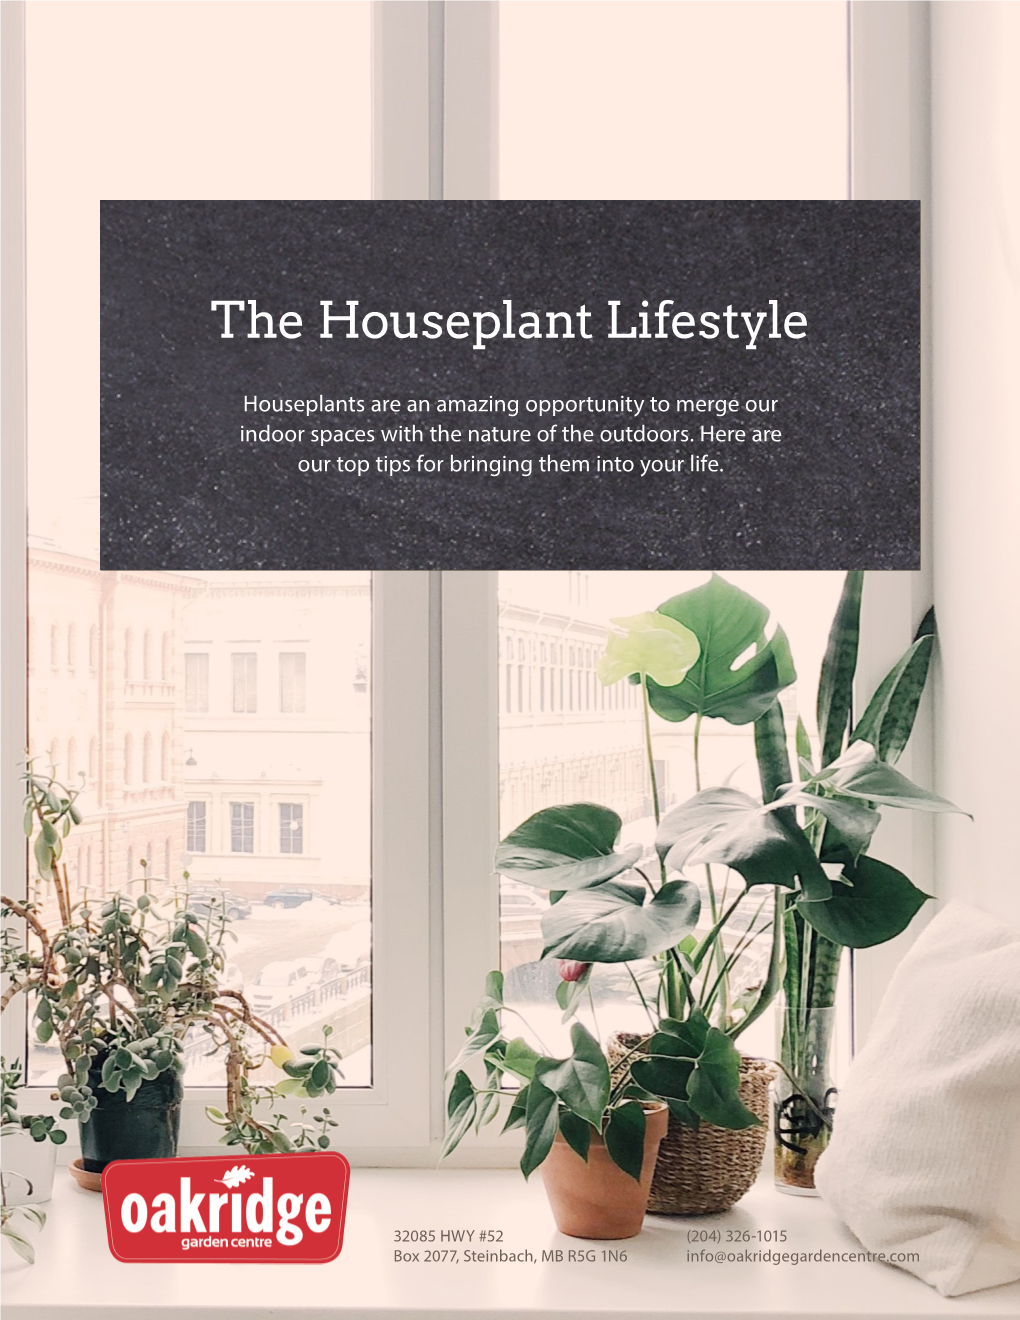 The Houseplant Lifestyle